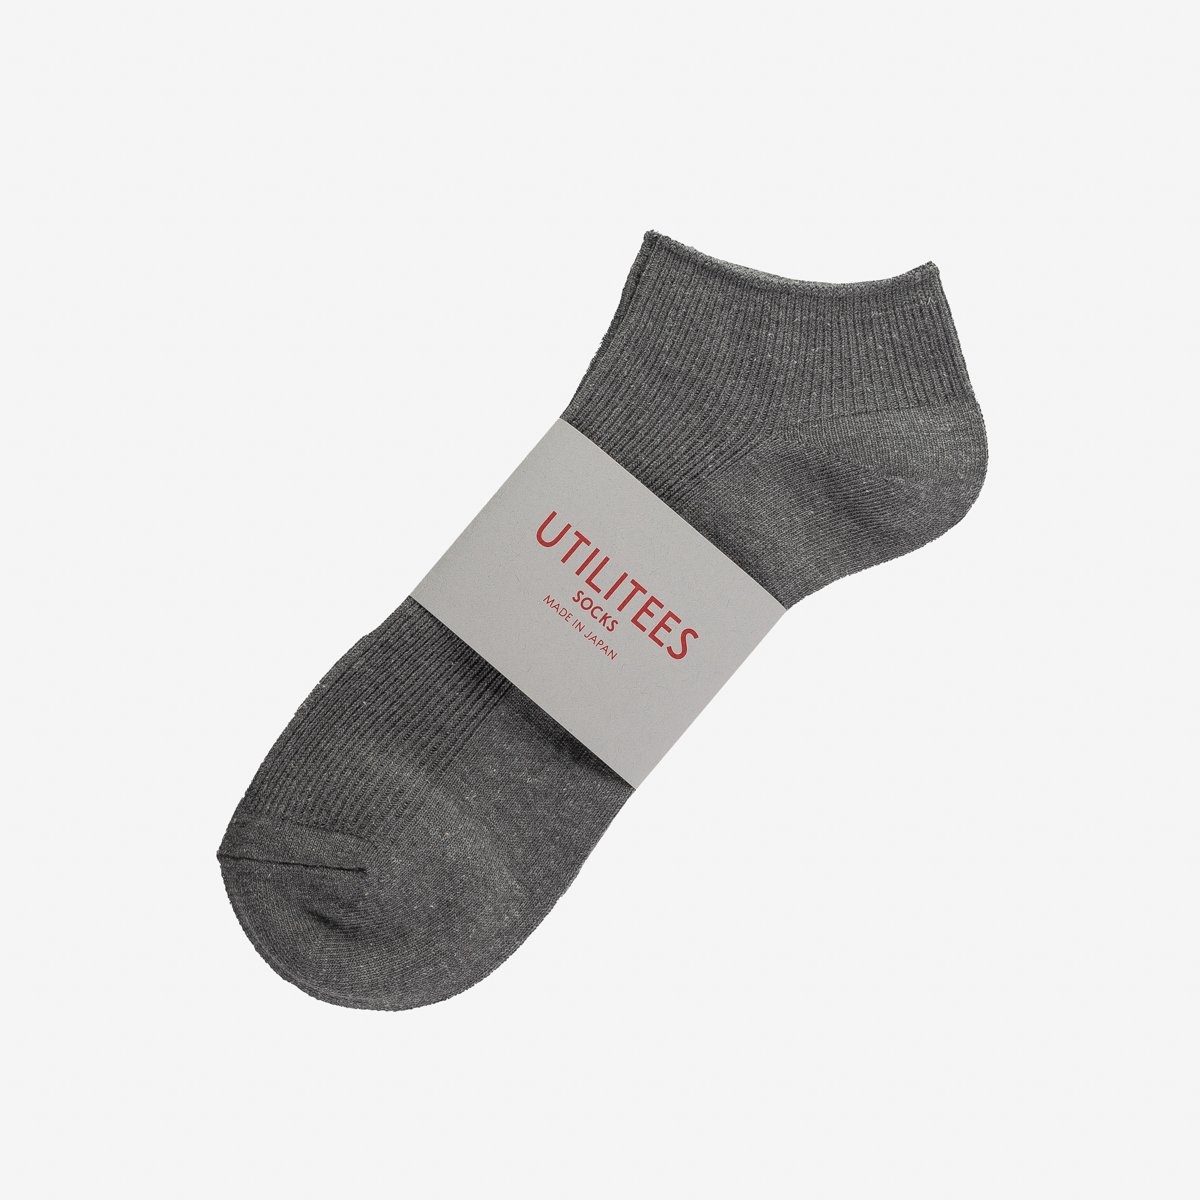 UTSS-GRY UTILITEES Mixed Cotton Sneaker Socks - Grey - 2